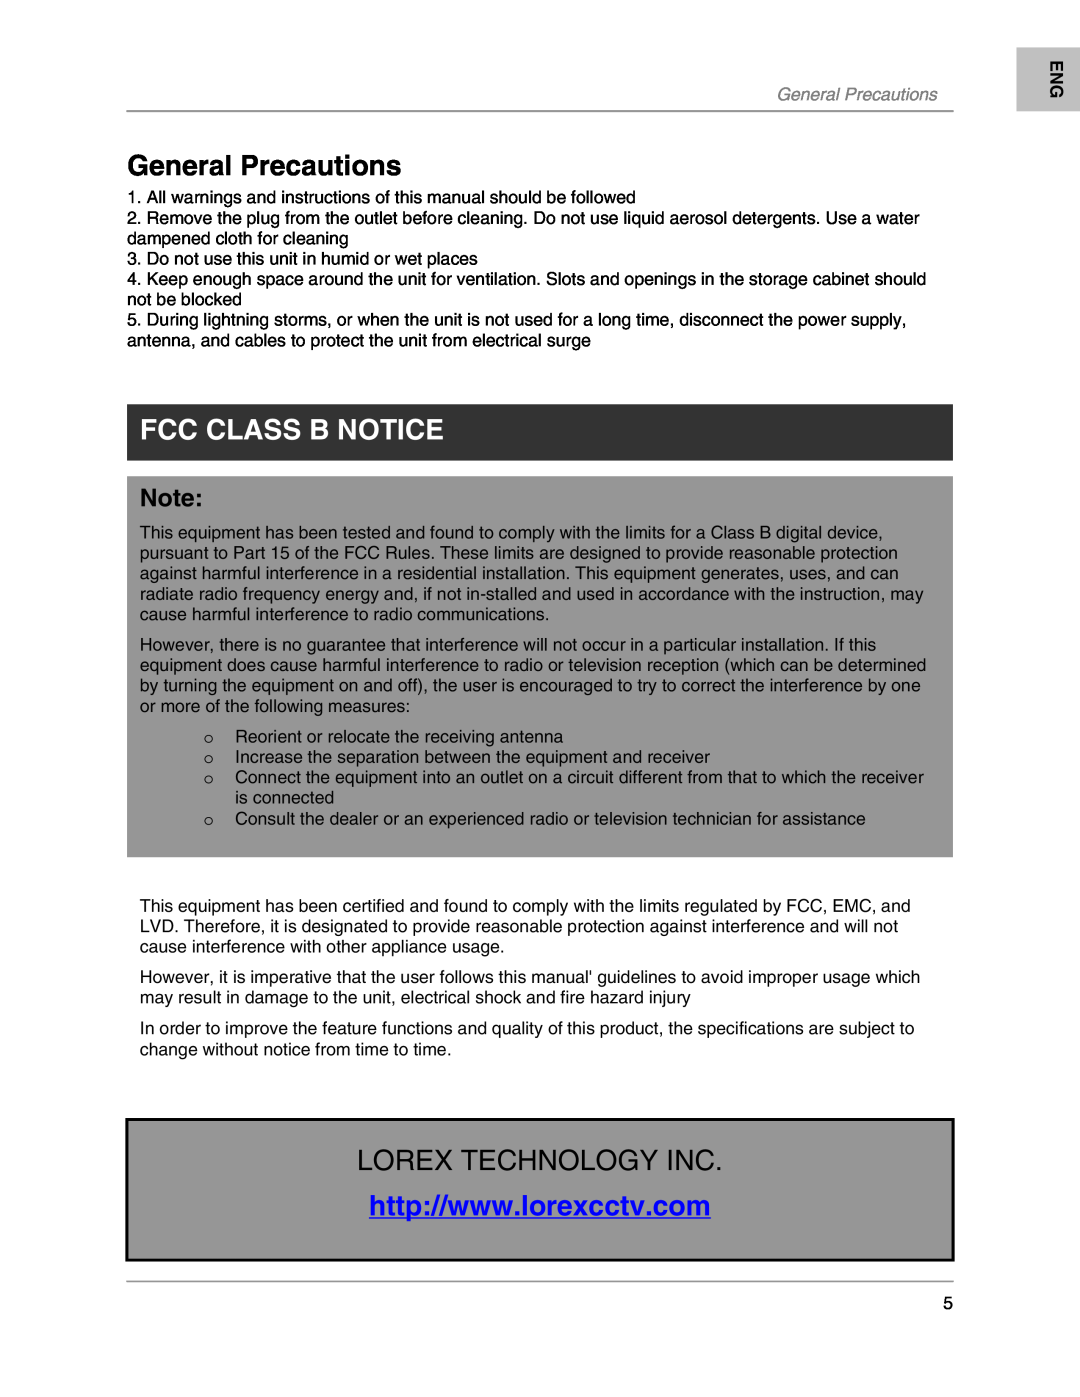 LOREX Technology L204, L208 instruction manual General Precautions, Fcc Class B Notice, Lorex Technology Inc 